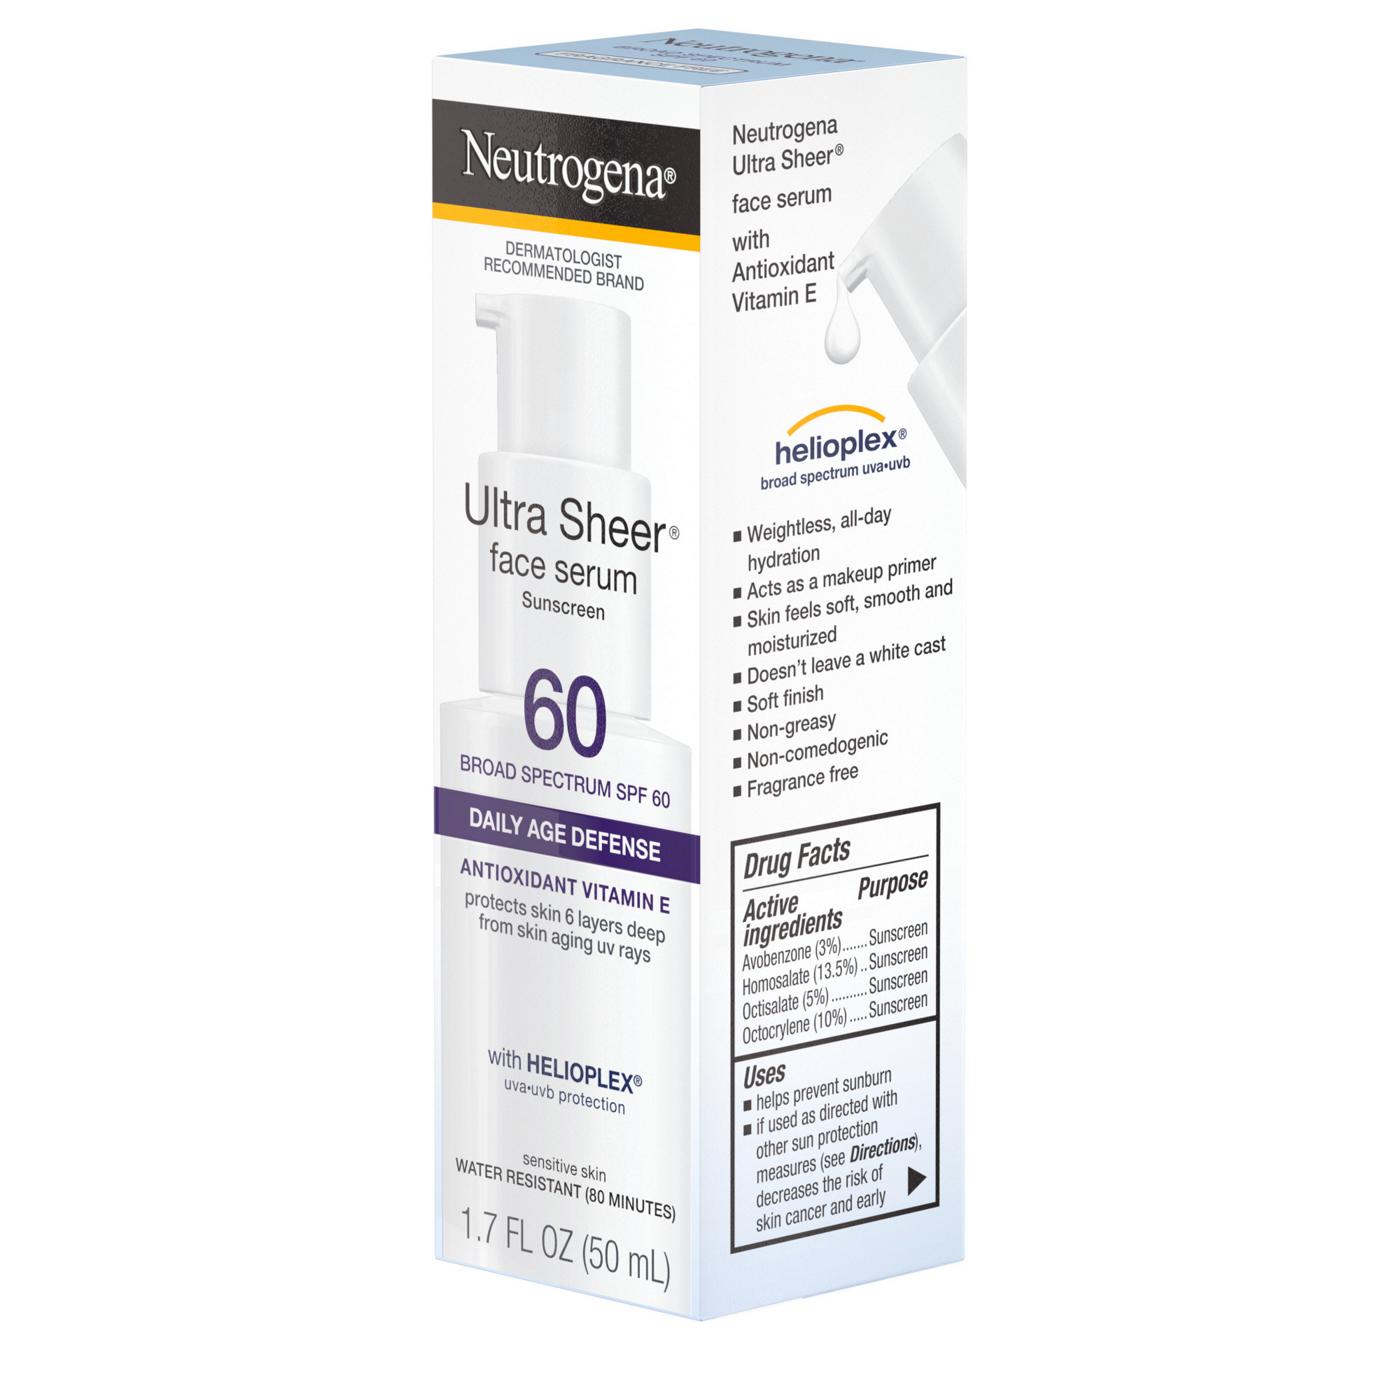 Neutrogena Ultra Sheer Moisturizing Face Serum Sunscreen SPF 60+; image 3 of 8